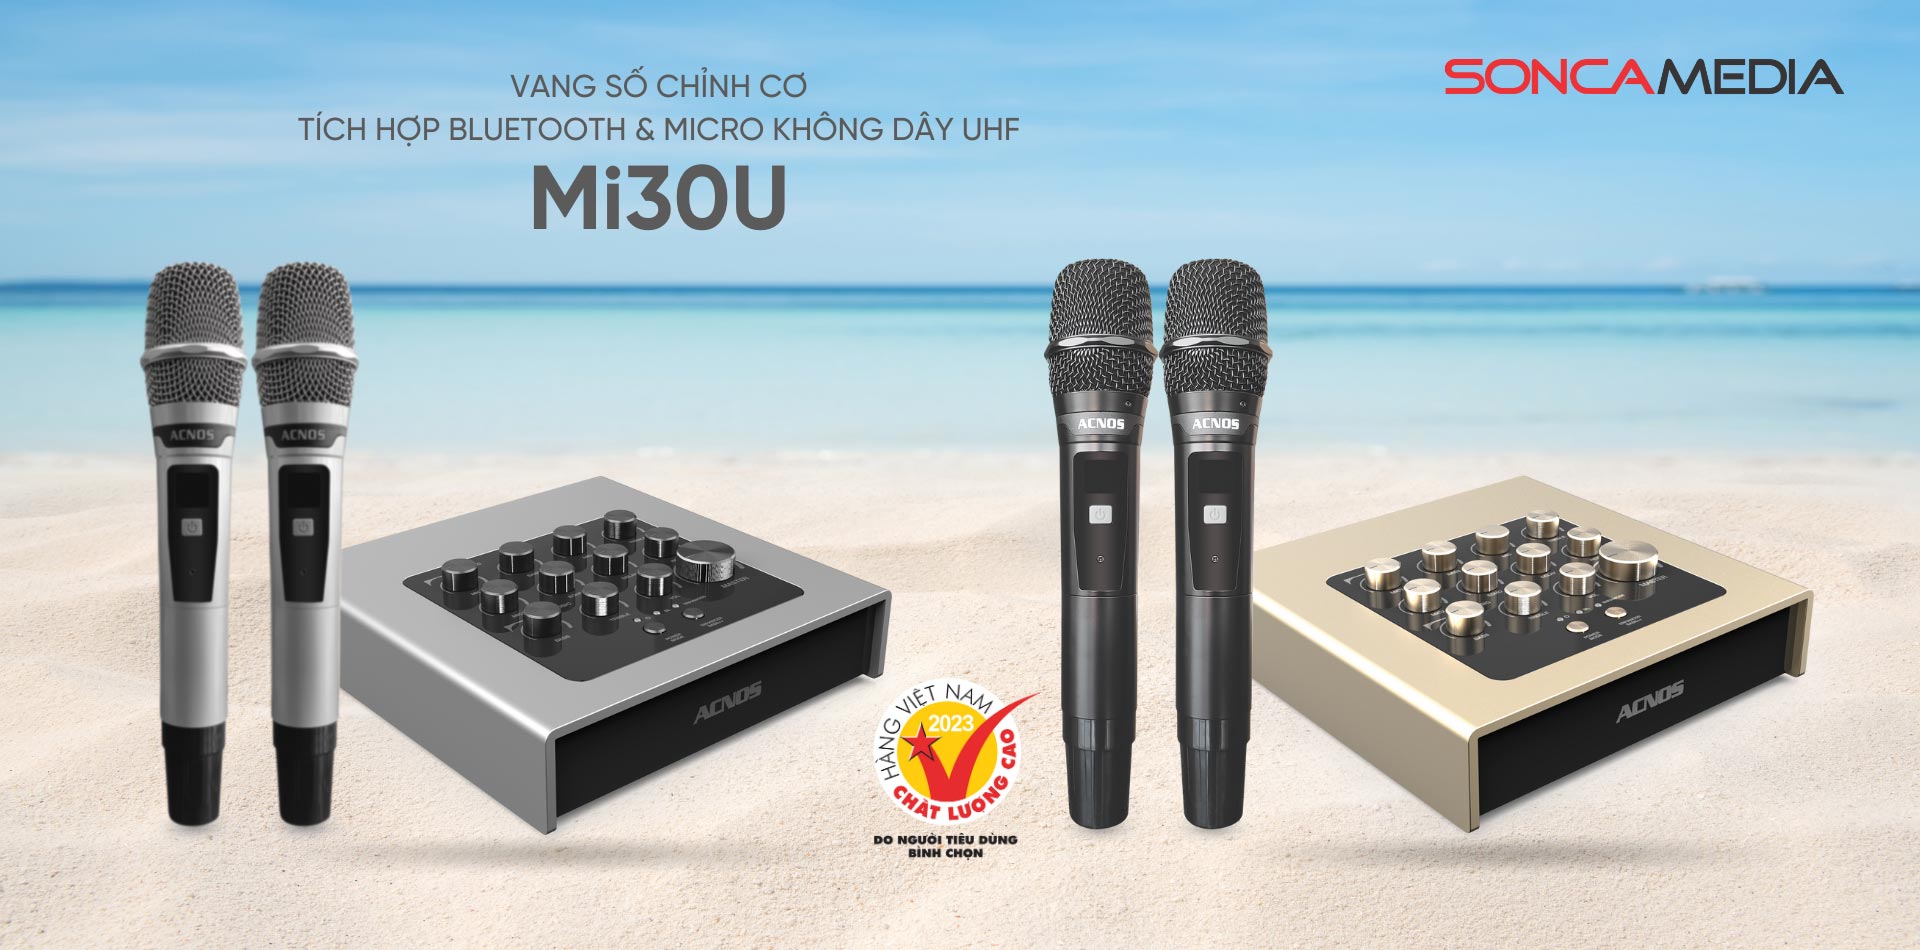 mi30u-acnos-vang-so-chinh-co-tich-hop-bluetooth-micro-khong-day-uhf